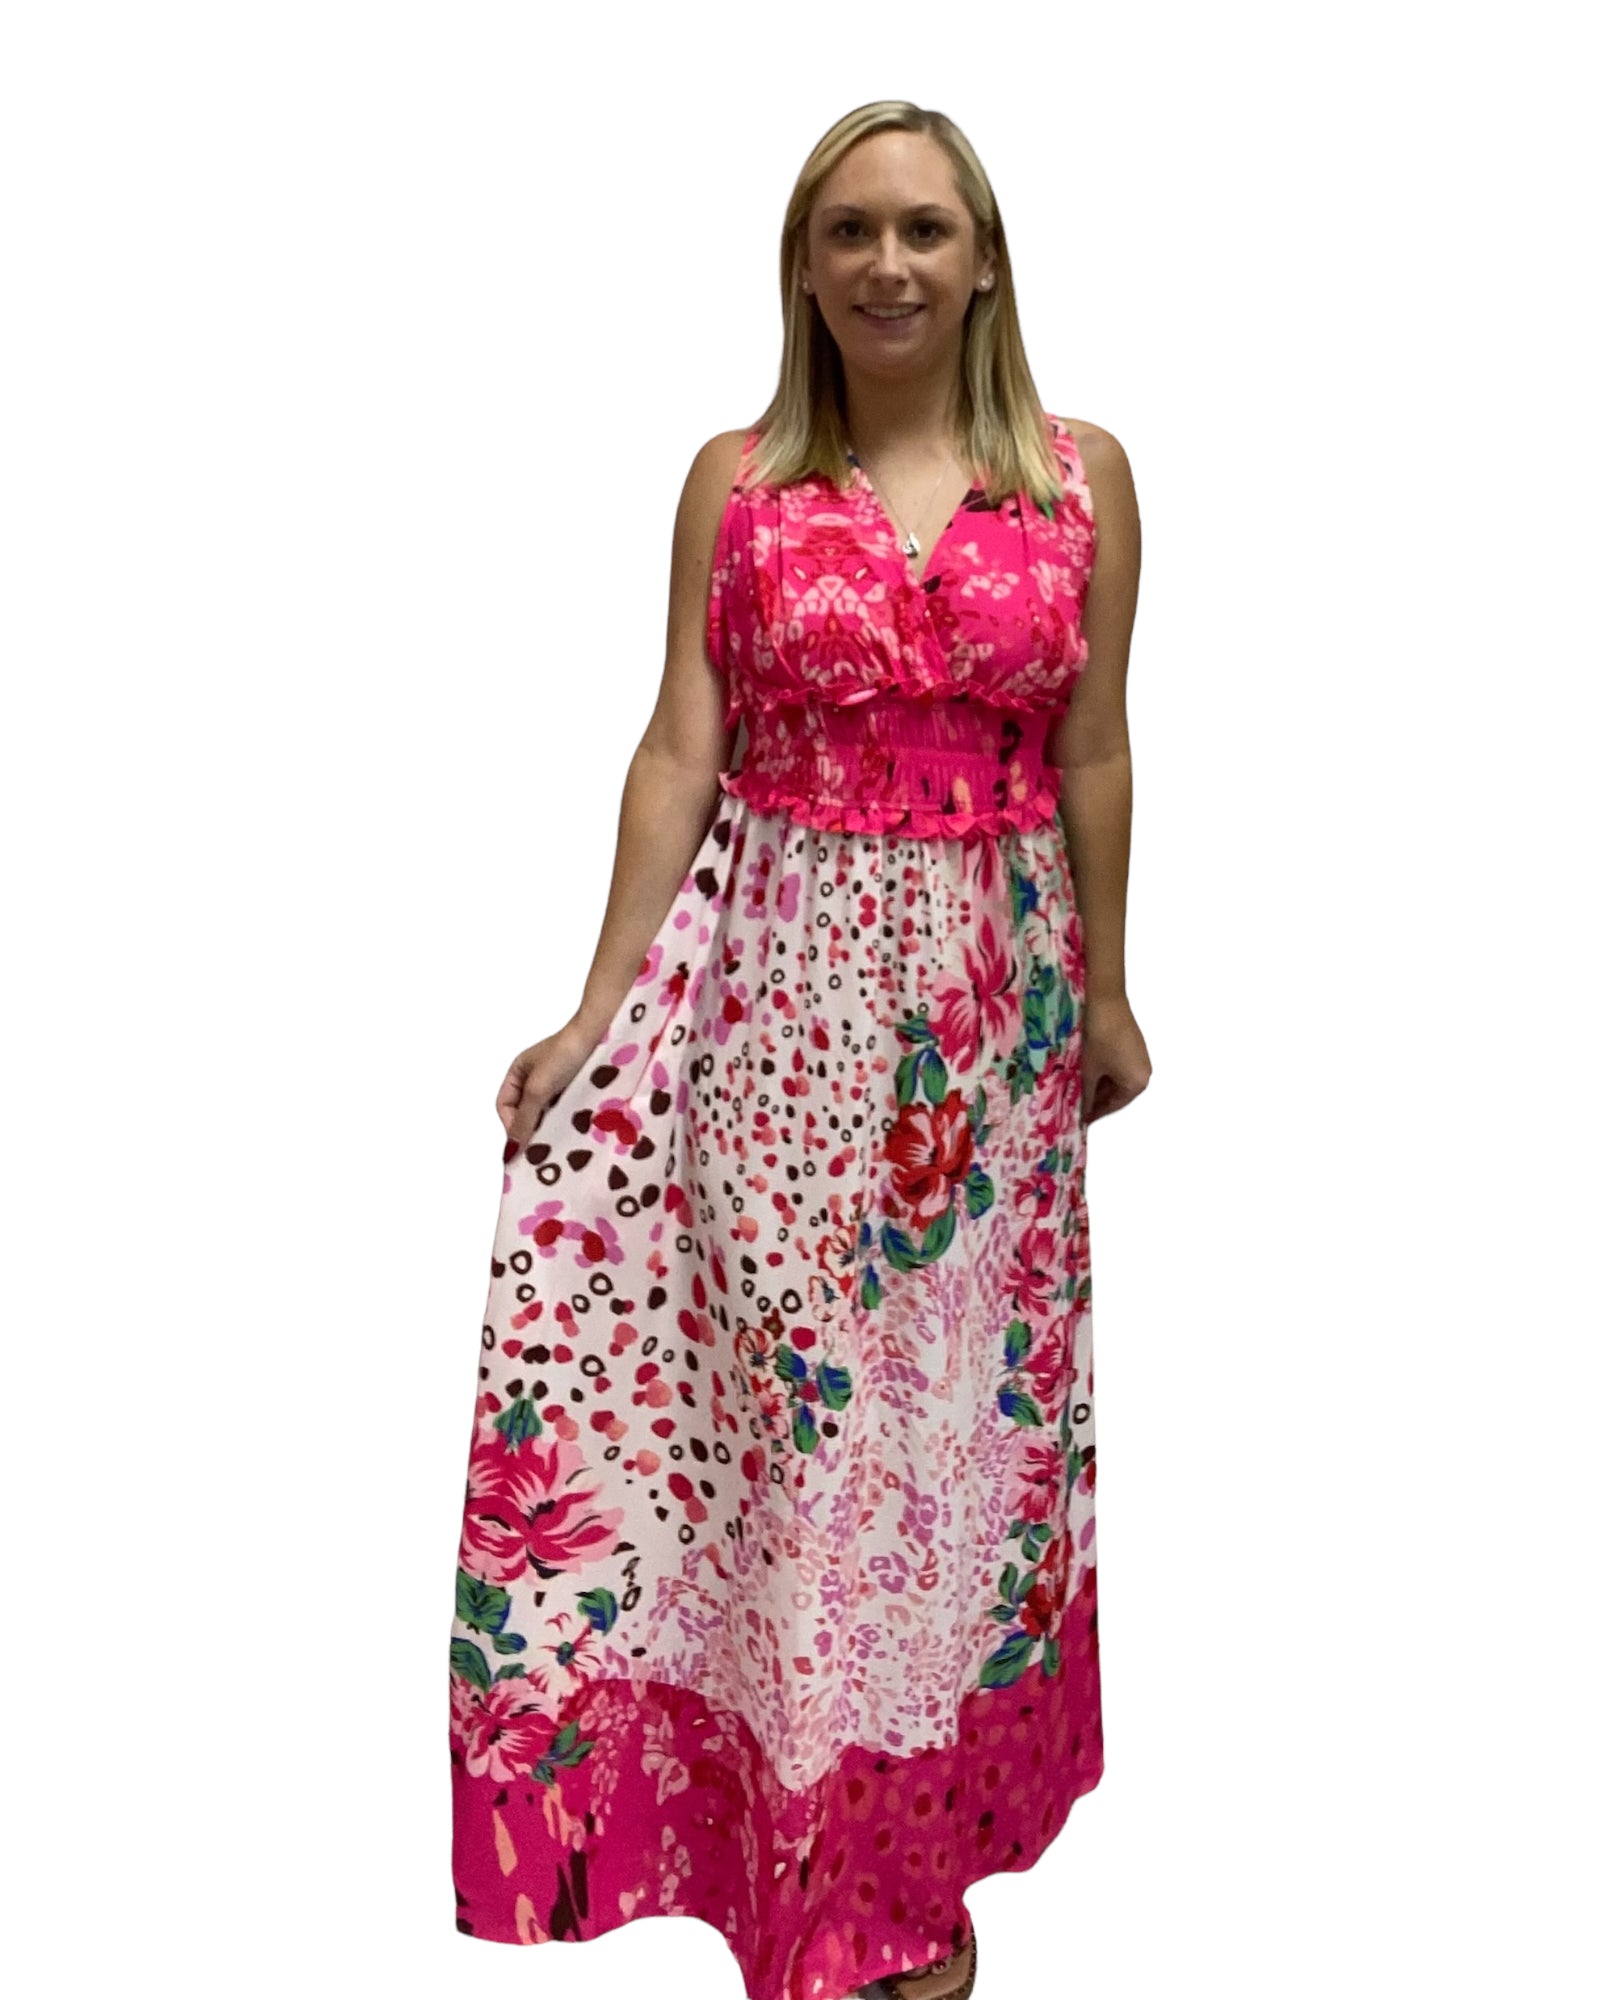 Summer Mixer Maxi Dress, Rose/Fuchsia